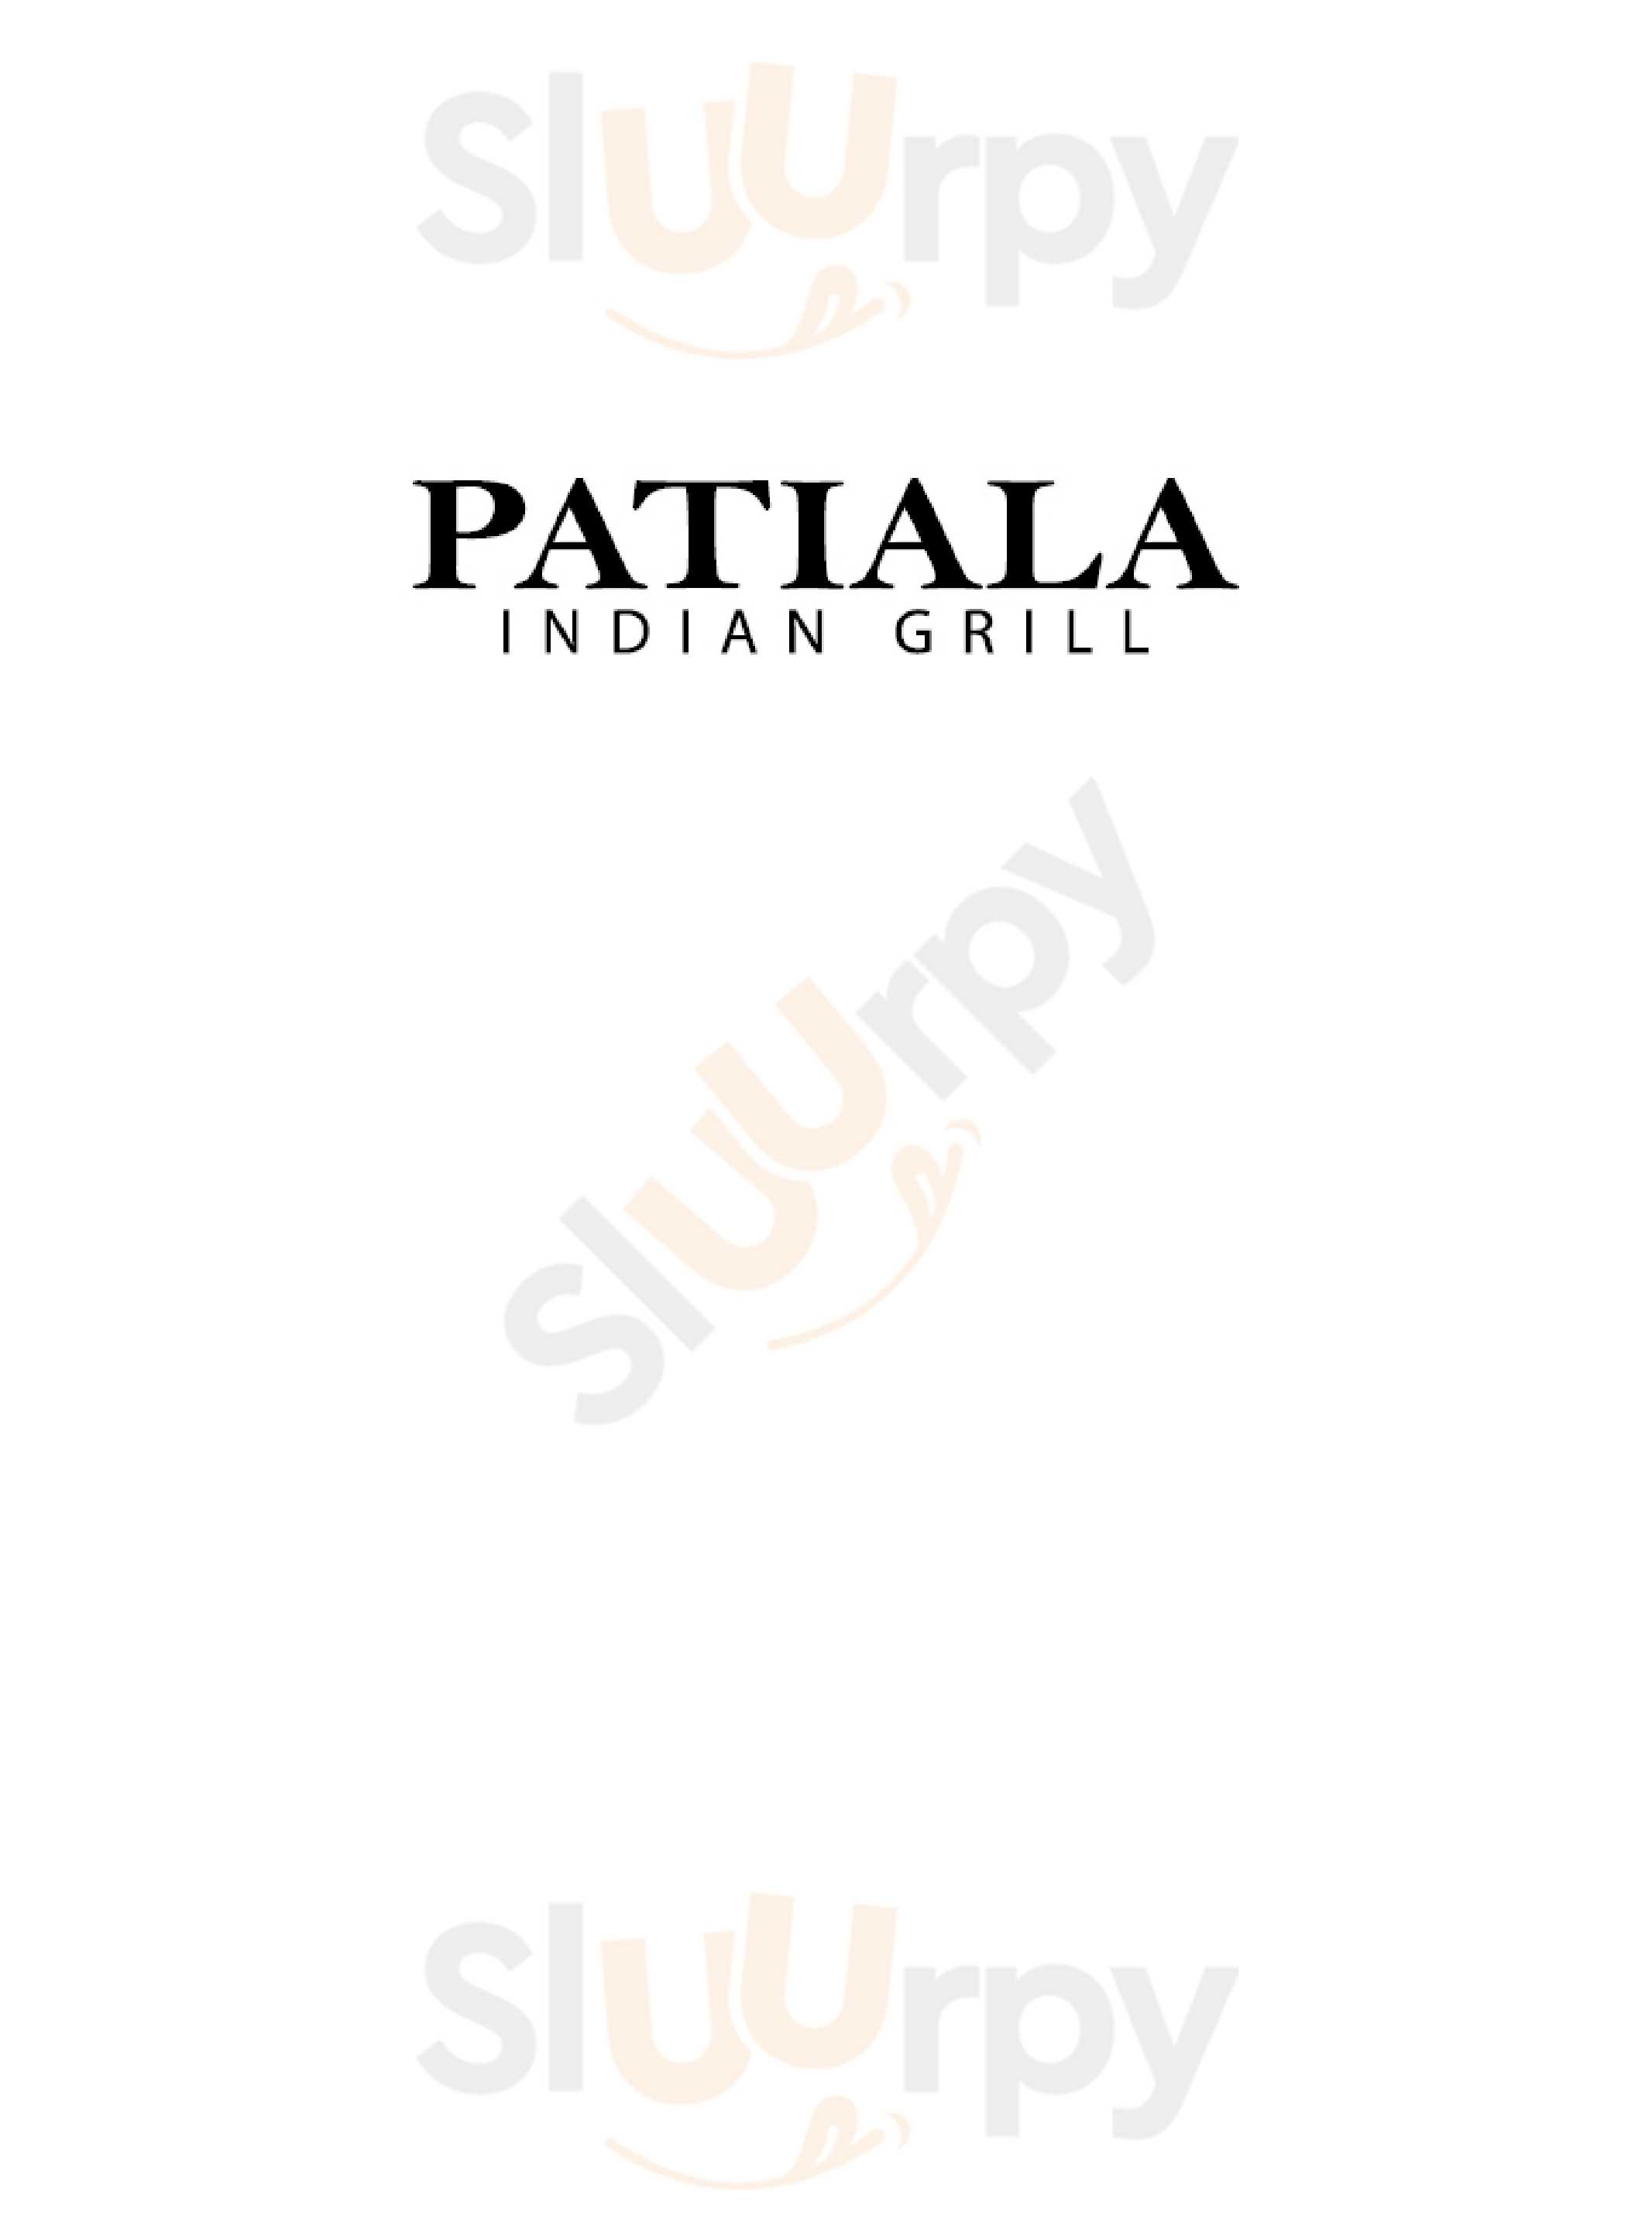 Patiala Indian Grill New York City Menu - 1